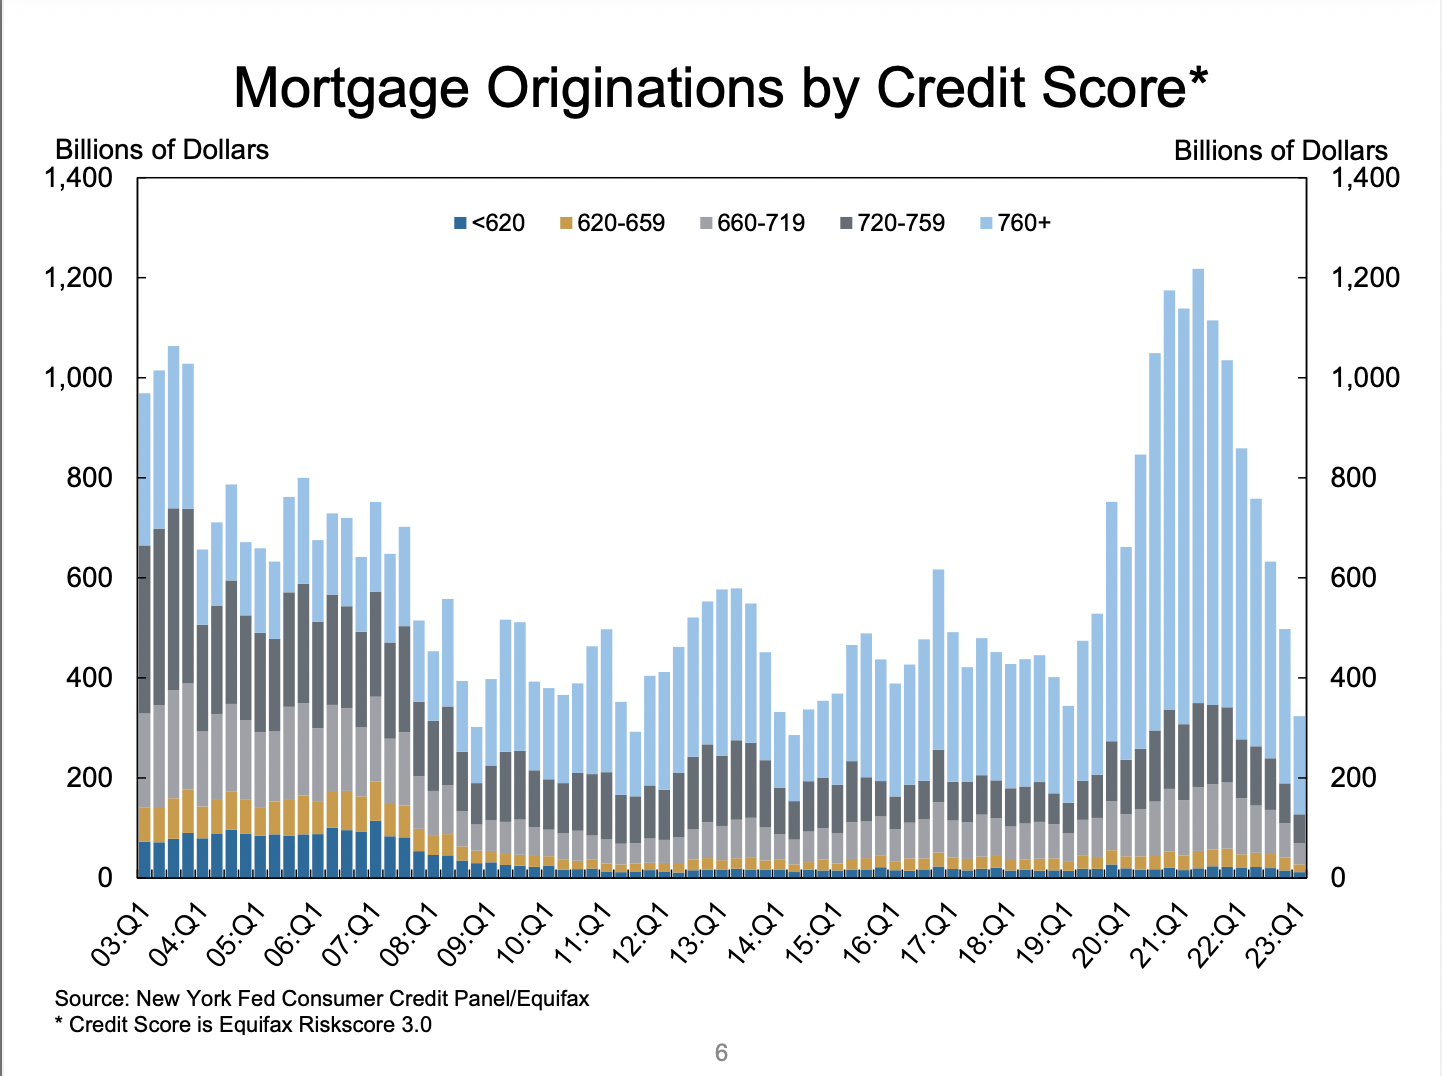 Mortgage origination by credit score